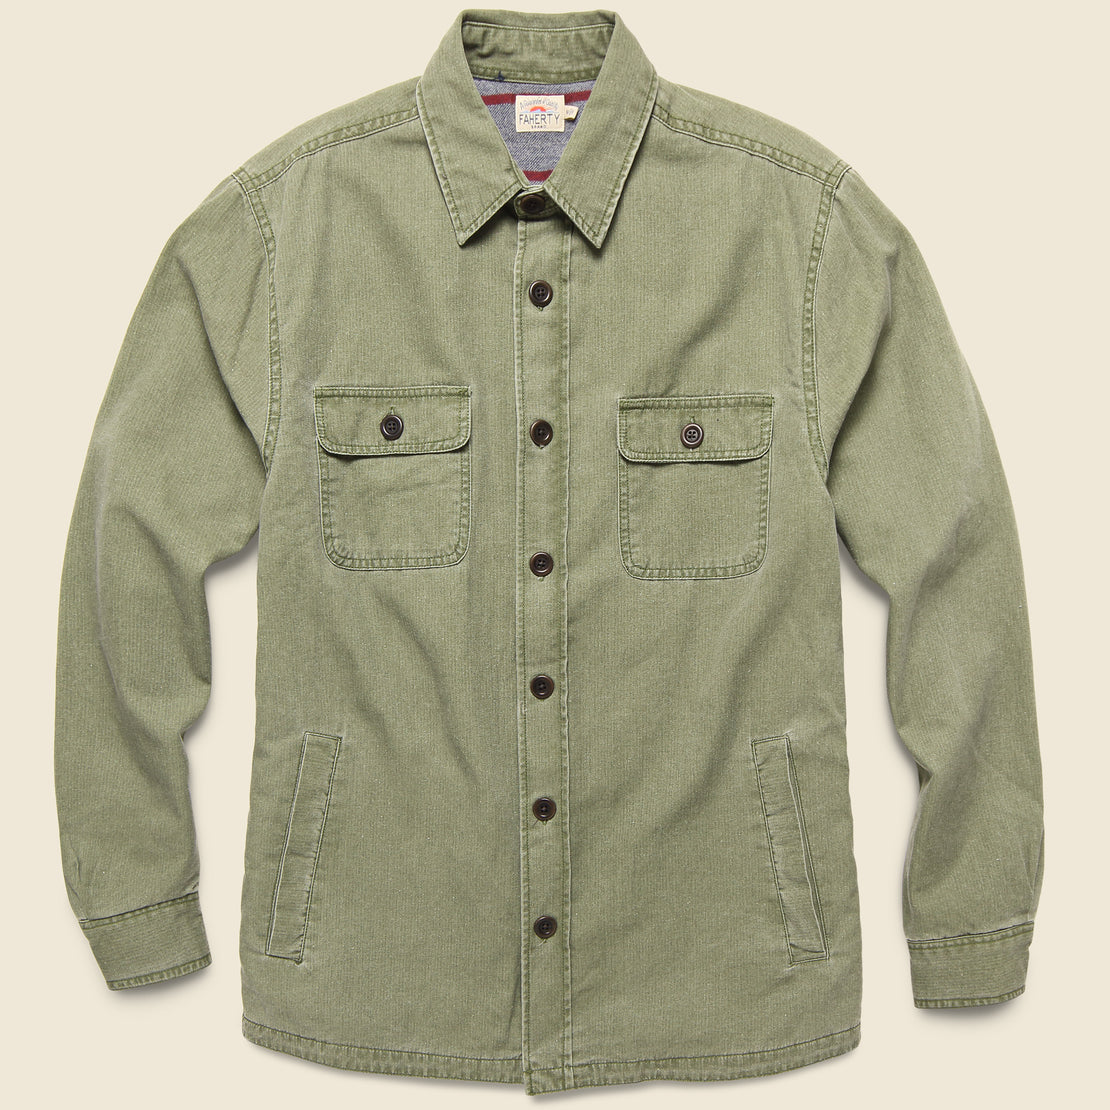 Faherty Blanket Lined CPO Shirt Jacket - Olive